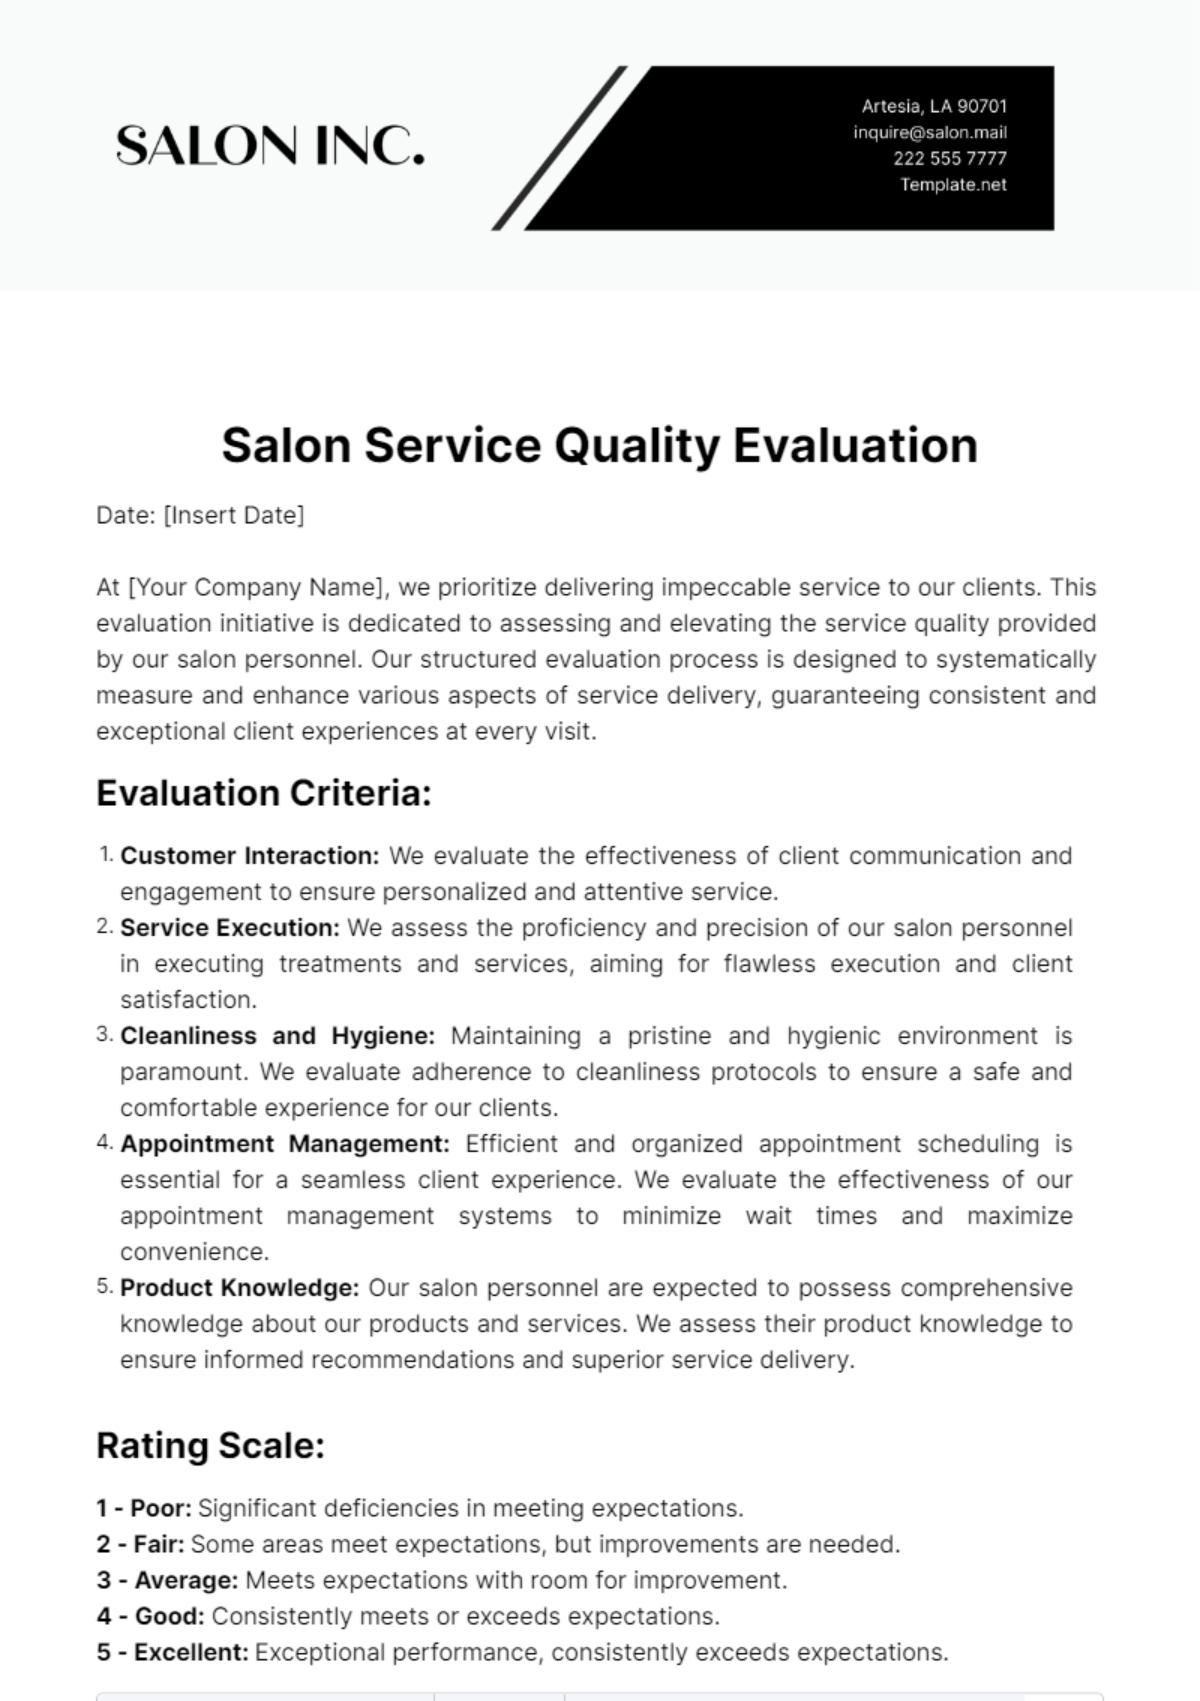 Salon Service Quality Evaluation Template